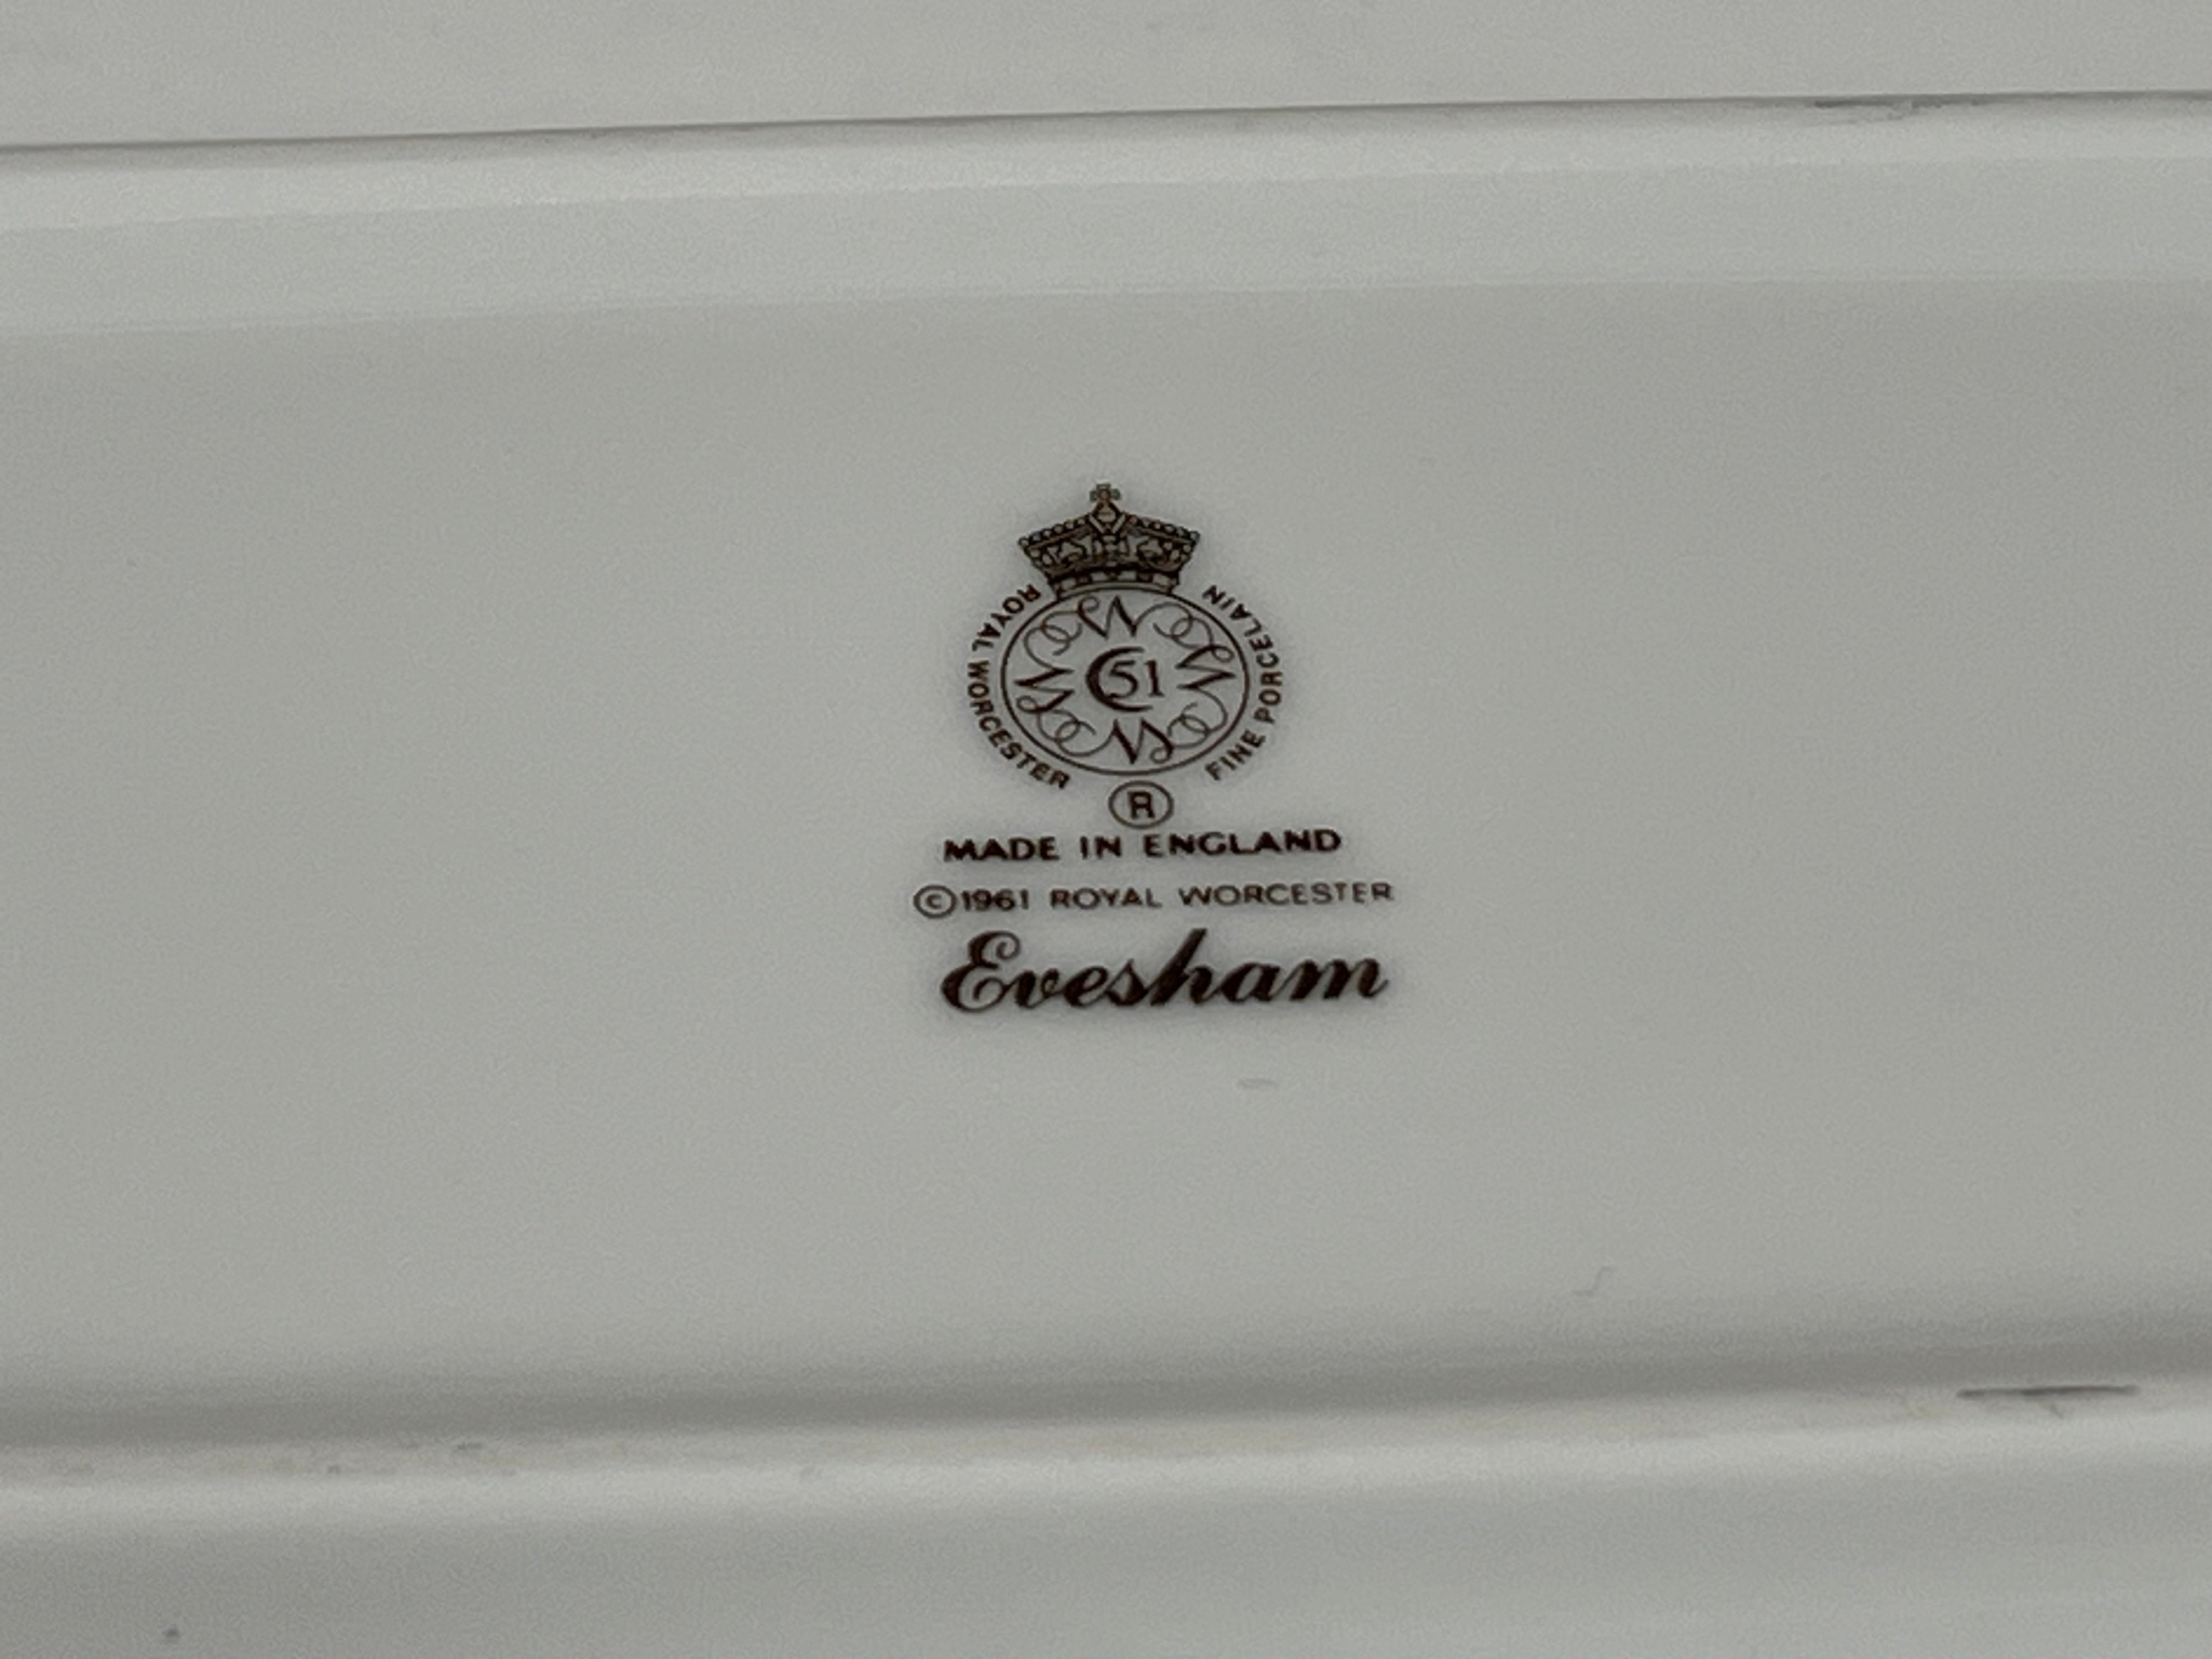 Royal Worchester Evesham Original Porcelain Fine China - Condiment Platter - Gold Trim - From England